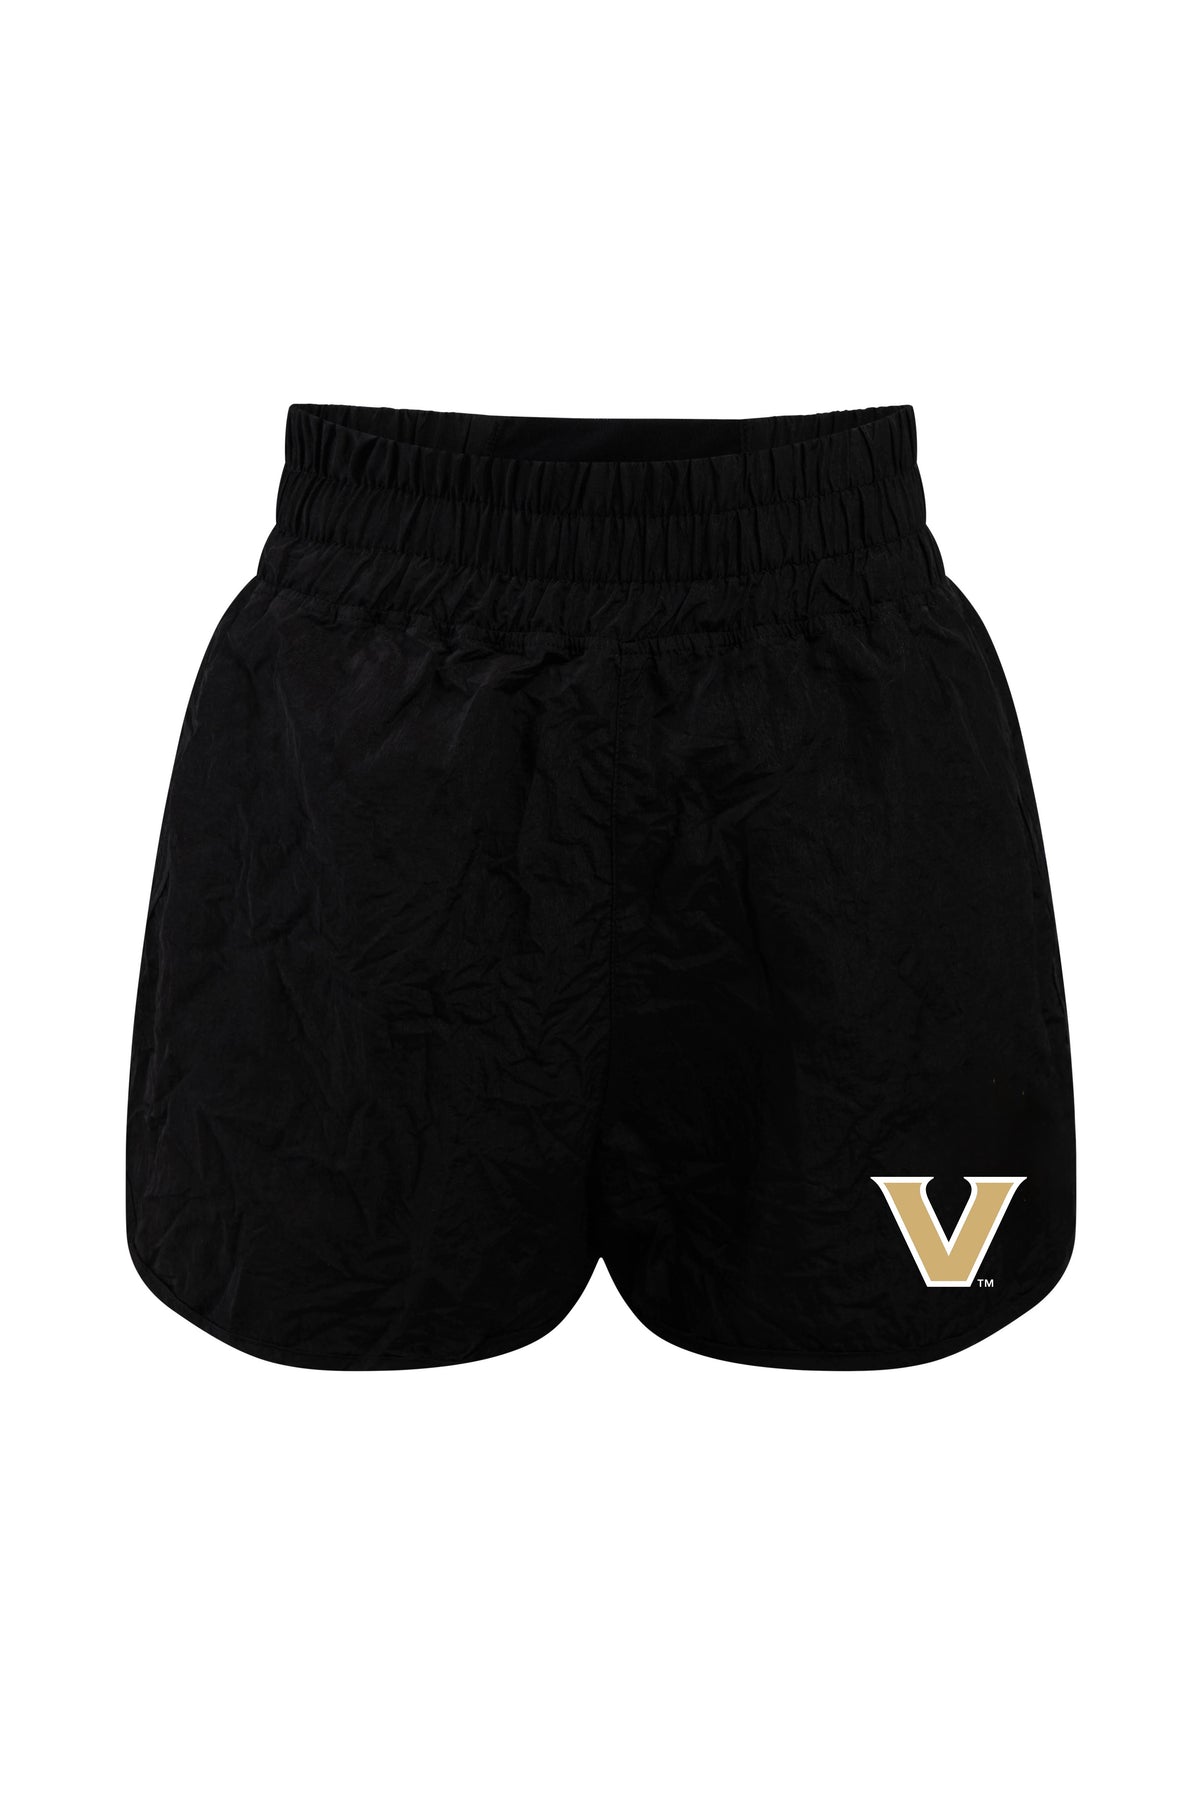 Vanderbilt University Boxer Short